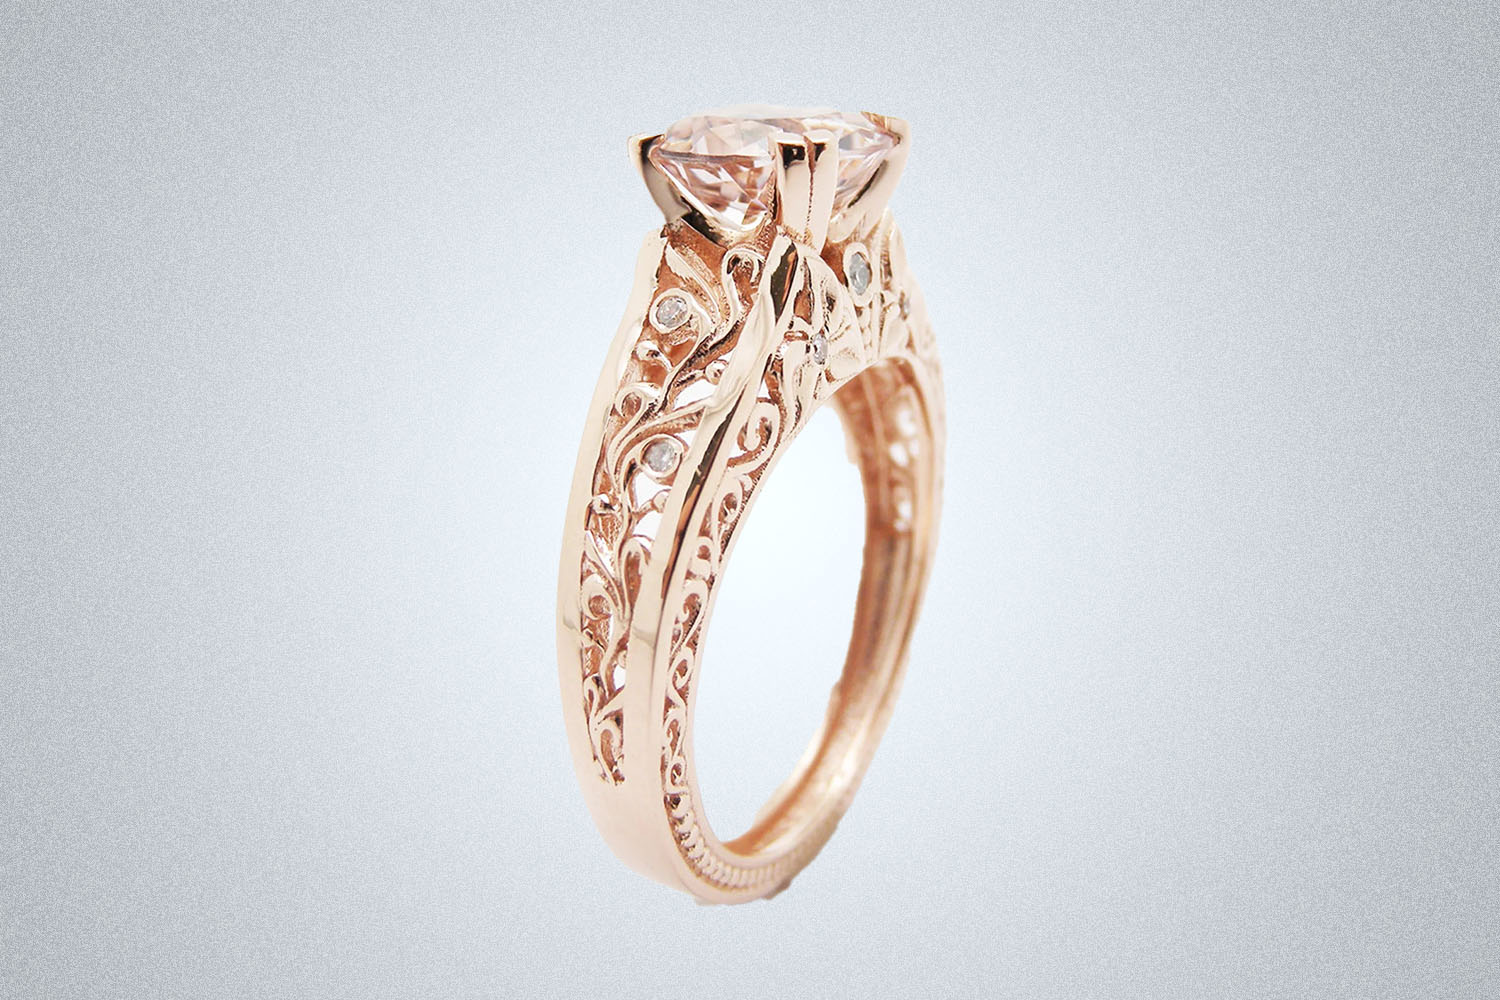 An AyalaDiamonds Vintage Engagement Ring 14K Rose Gold on a gray background.